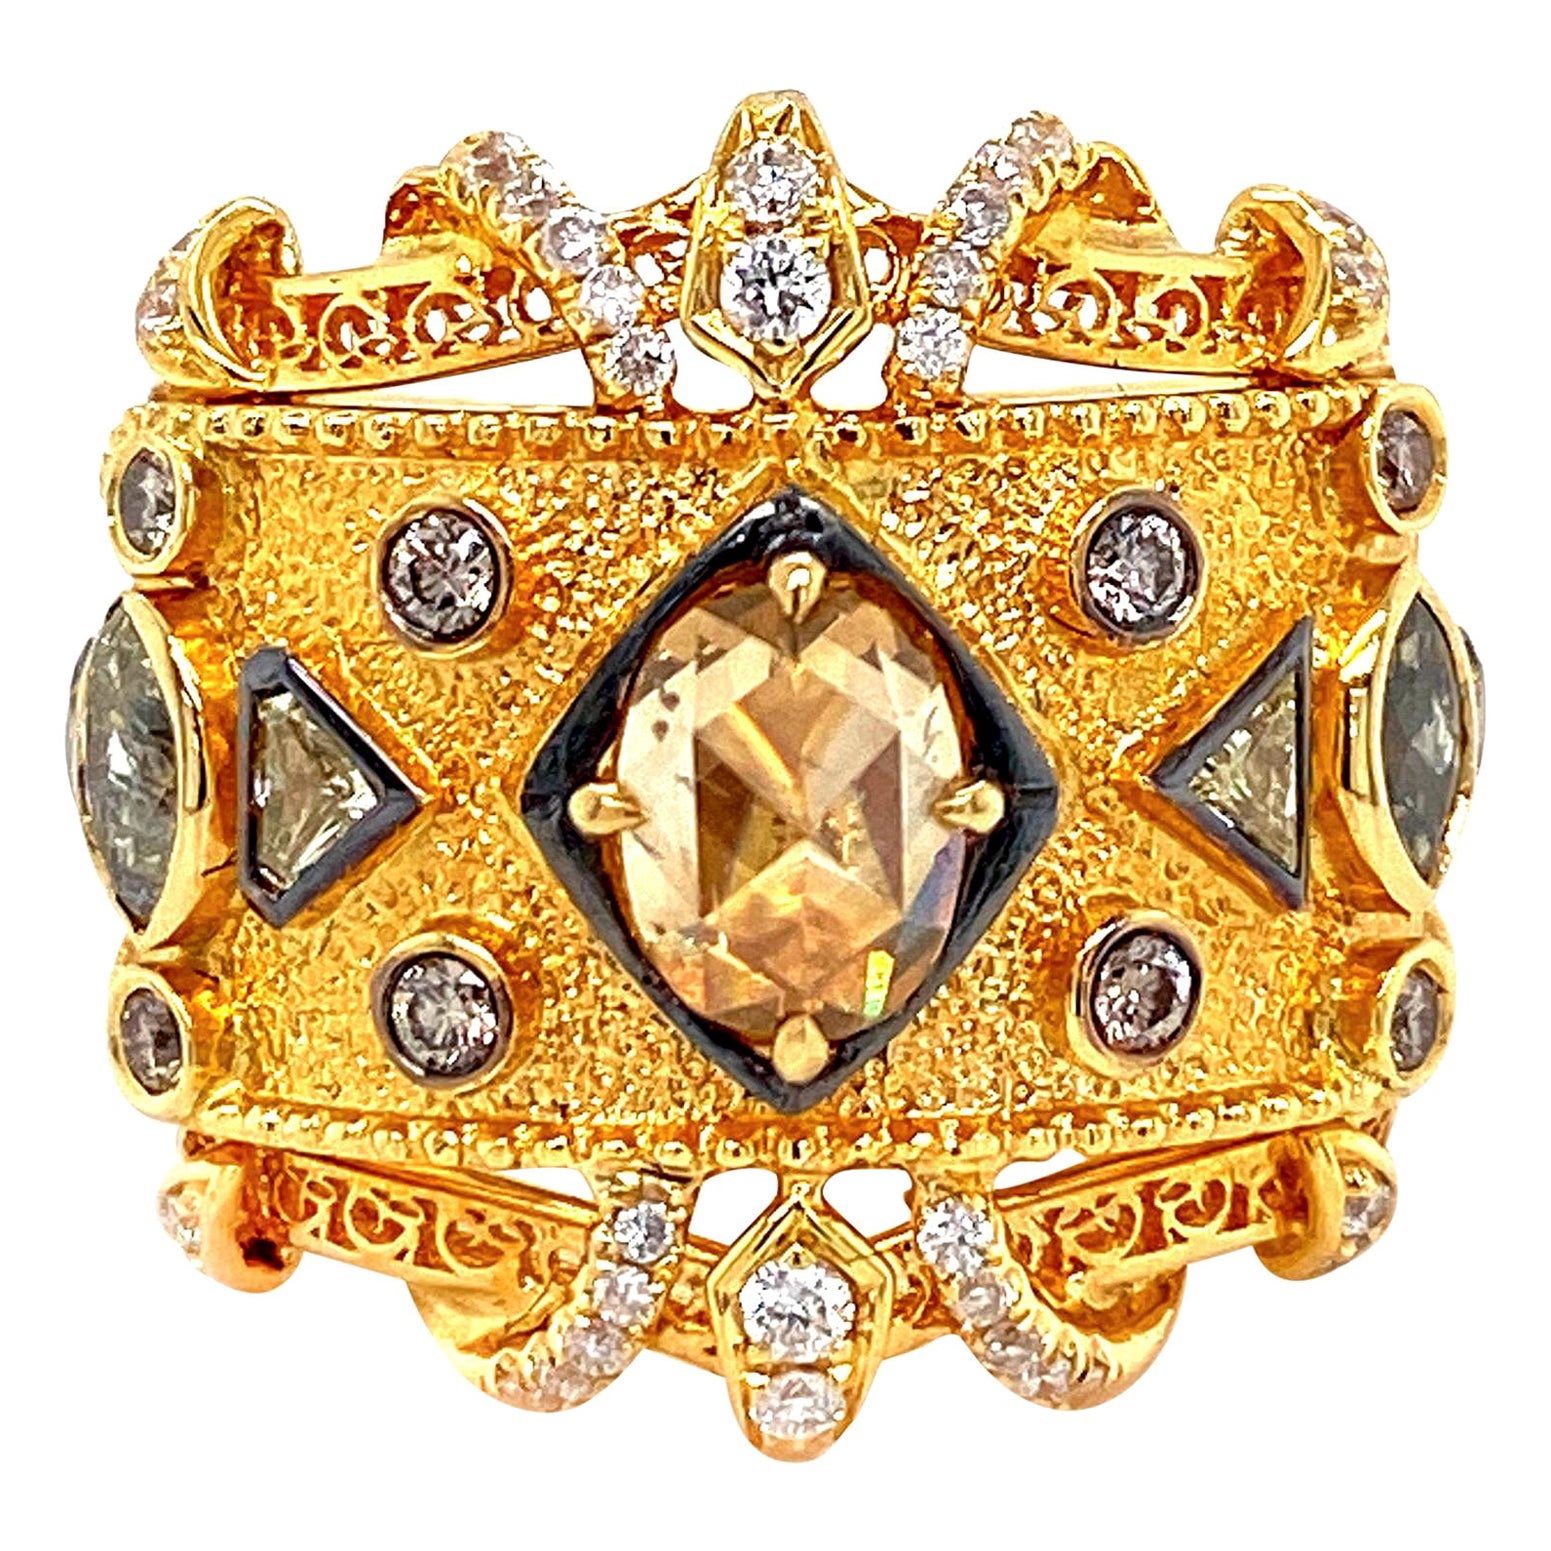 Dilys' Artisanal Fancy Color Diamond Ring in 18 Karat Gold